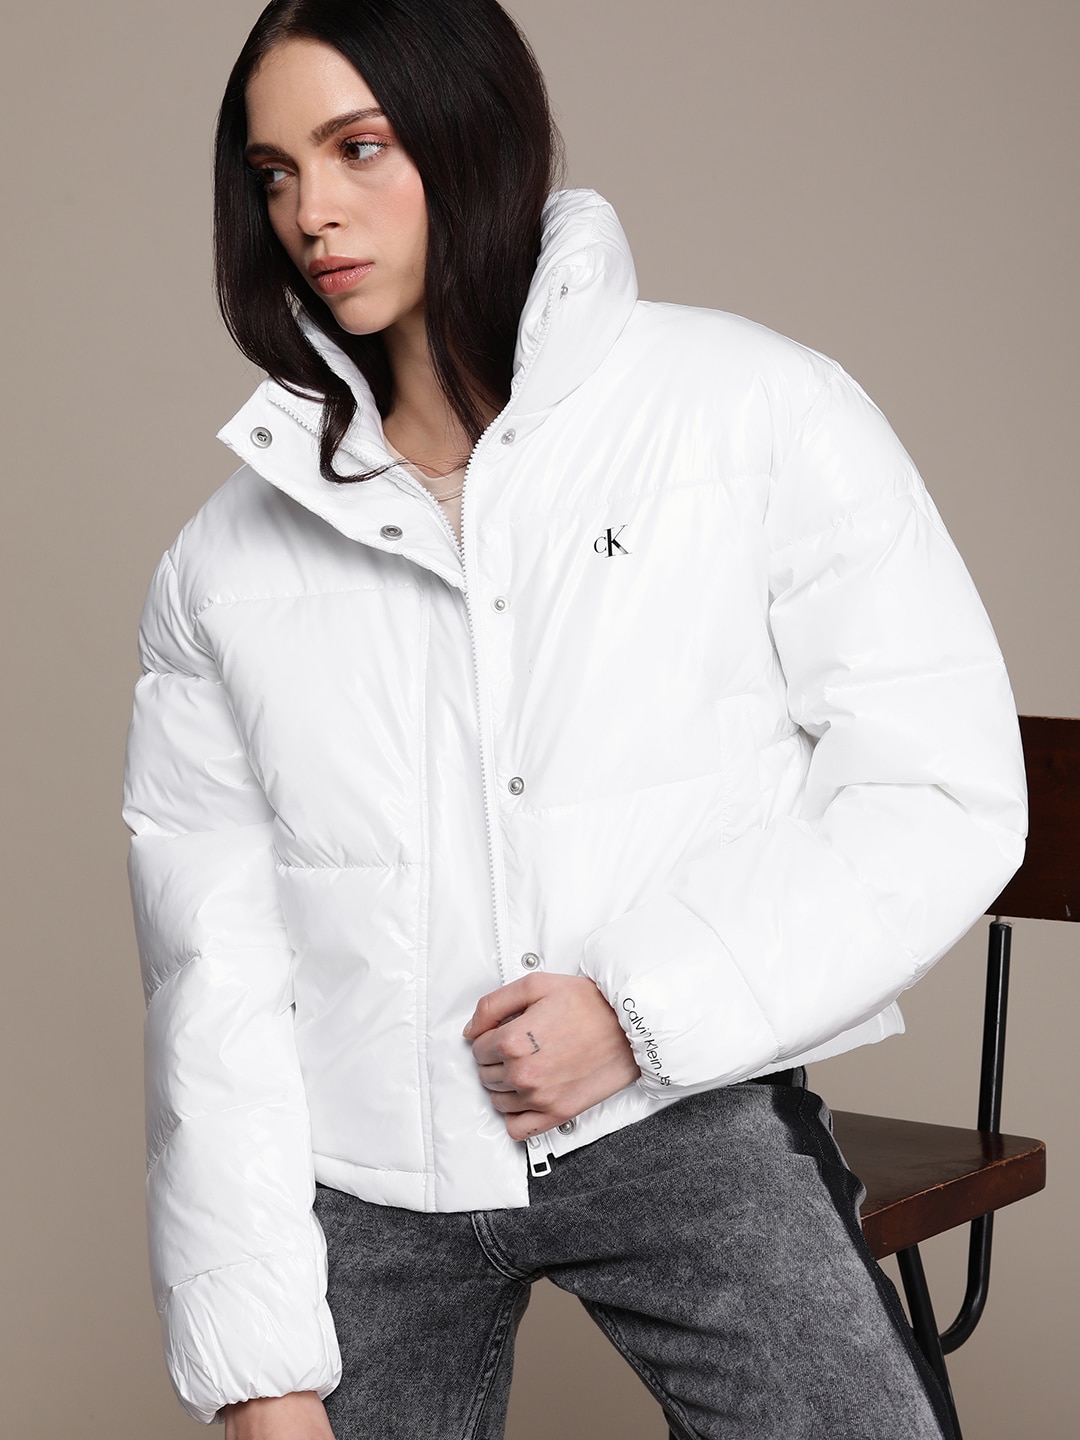 Calvin Klein jacket - Athletic apparel-gemektower.com.vn